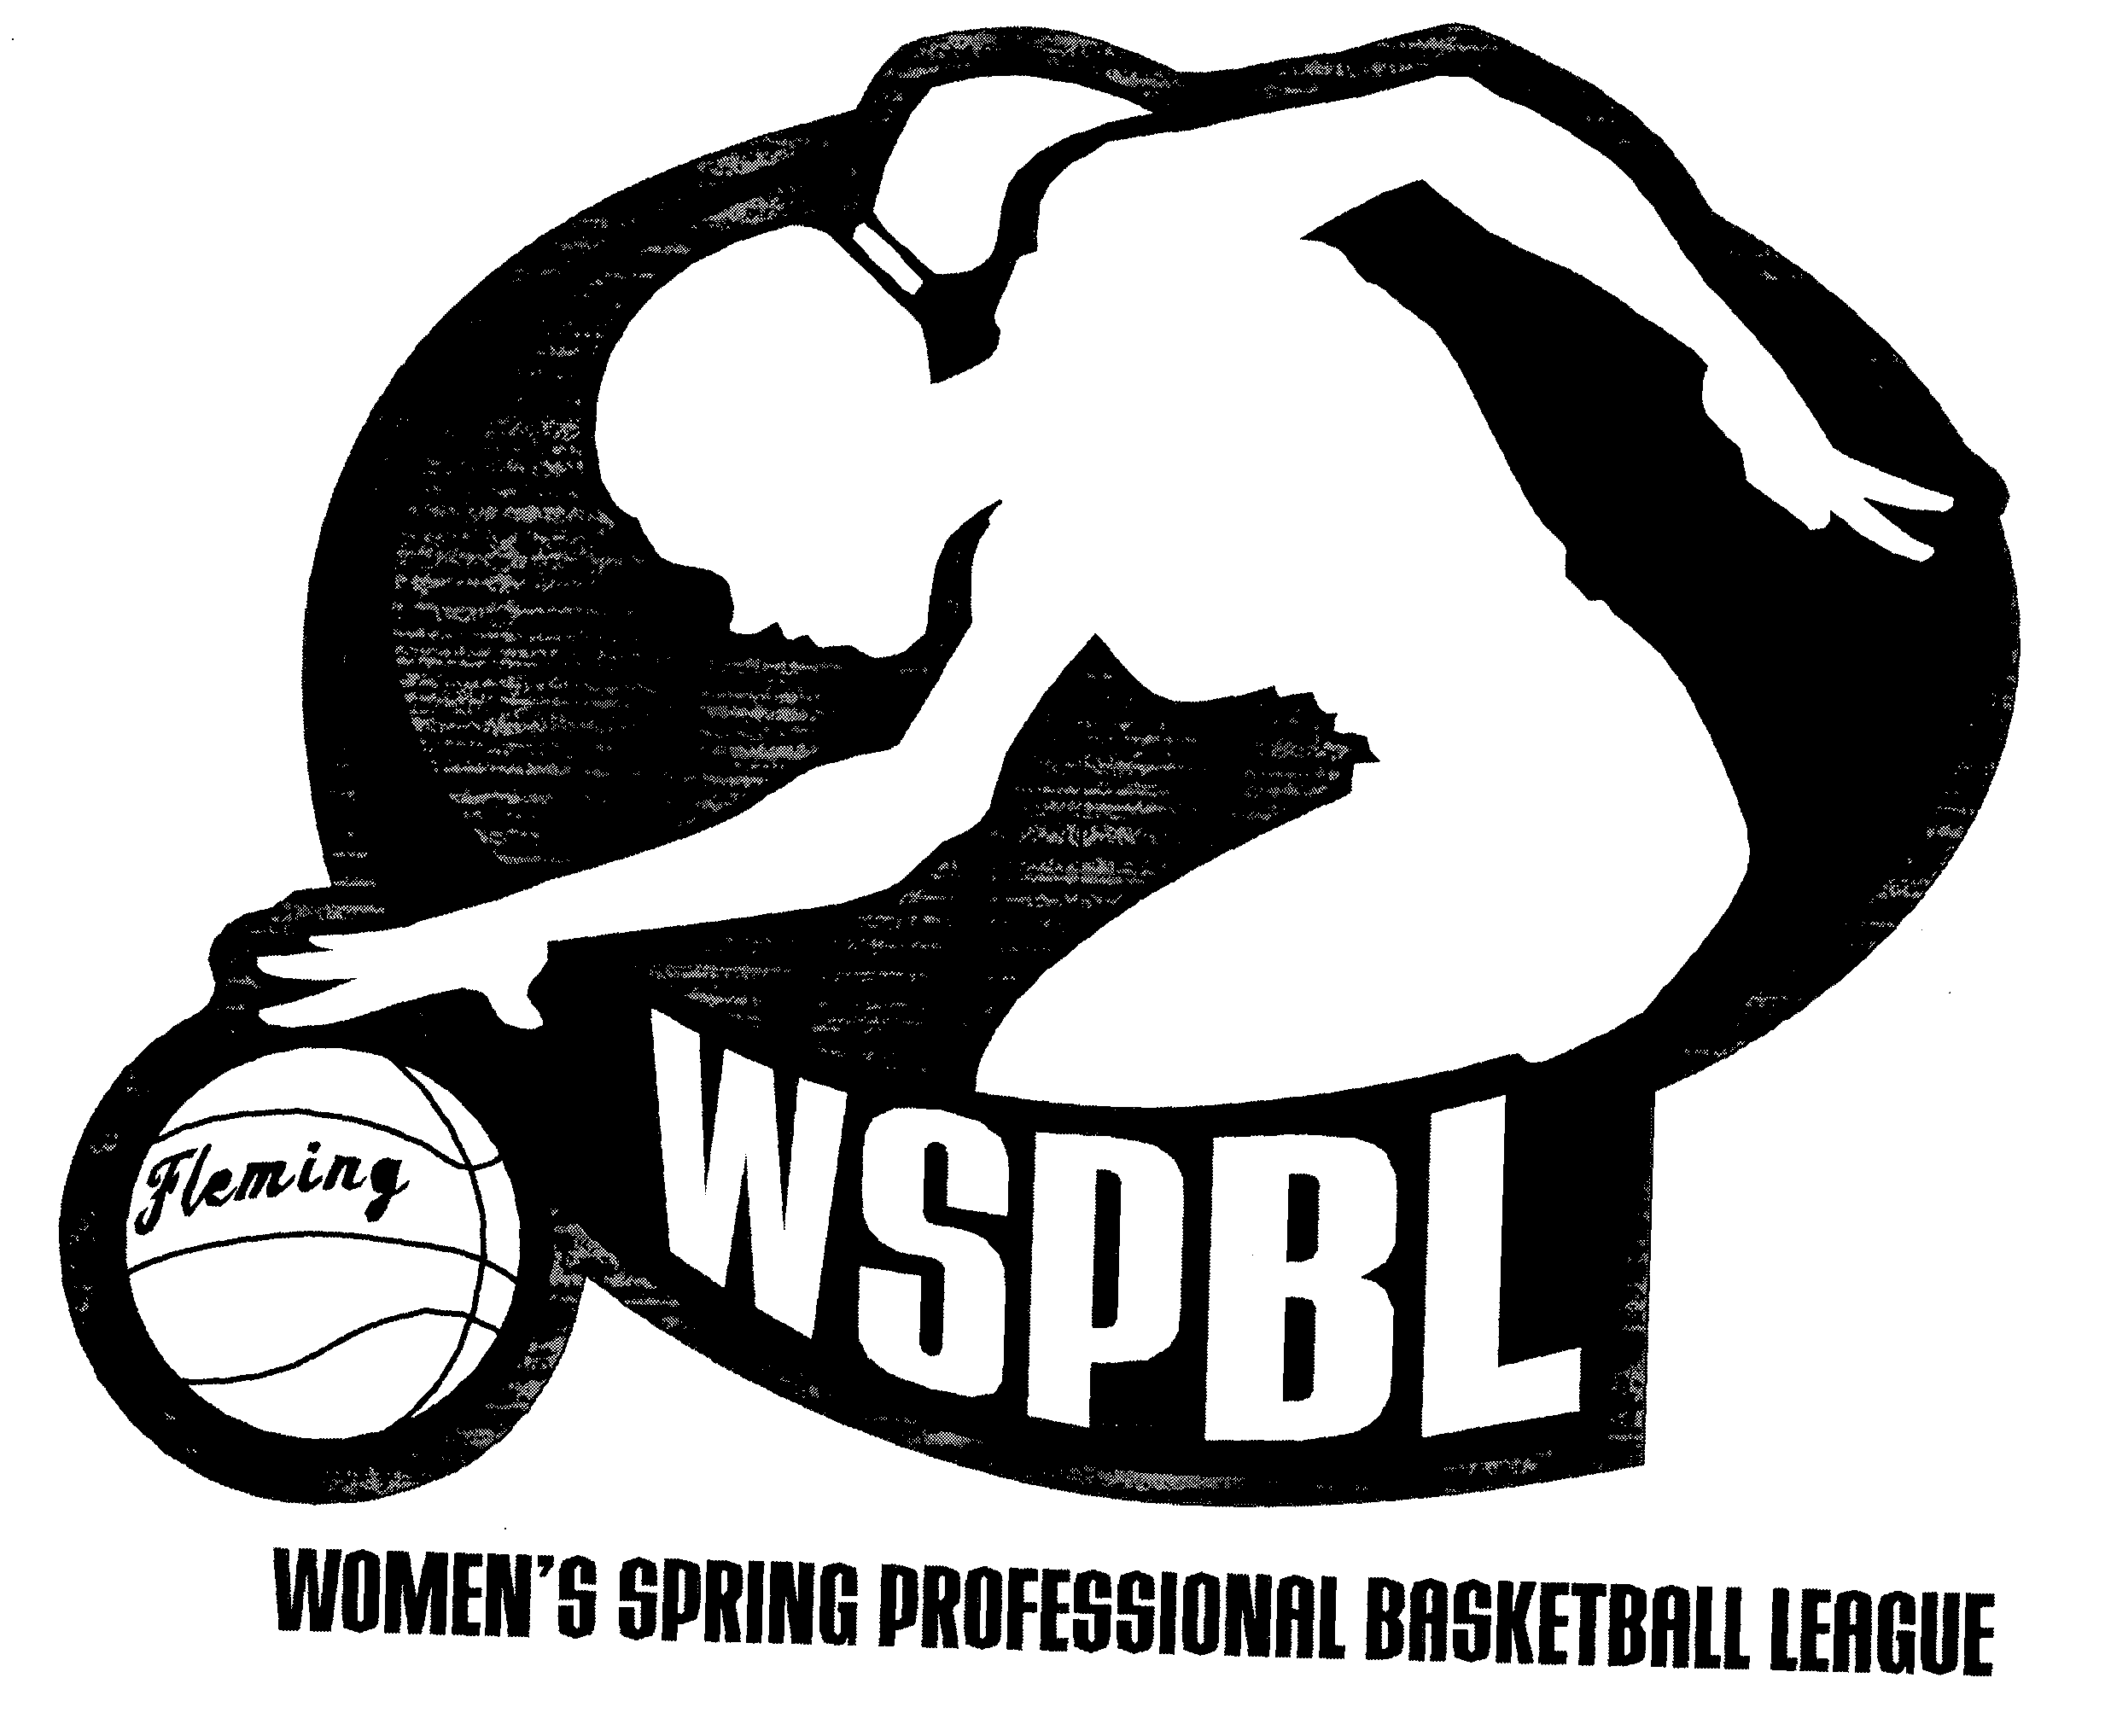  WSPBL WOMEN'S SPRING PROFESSIONAL BASKETBALL LEAGUE